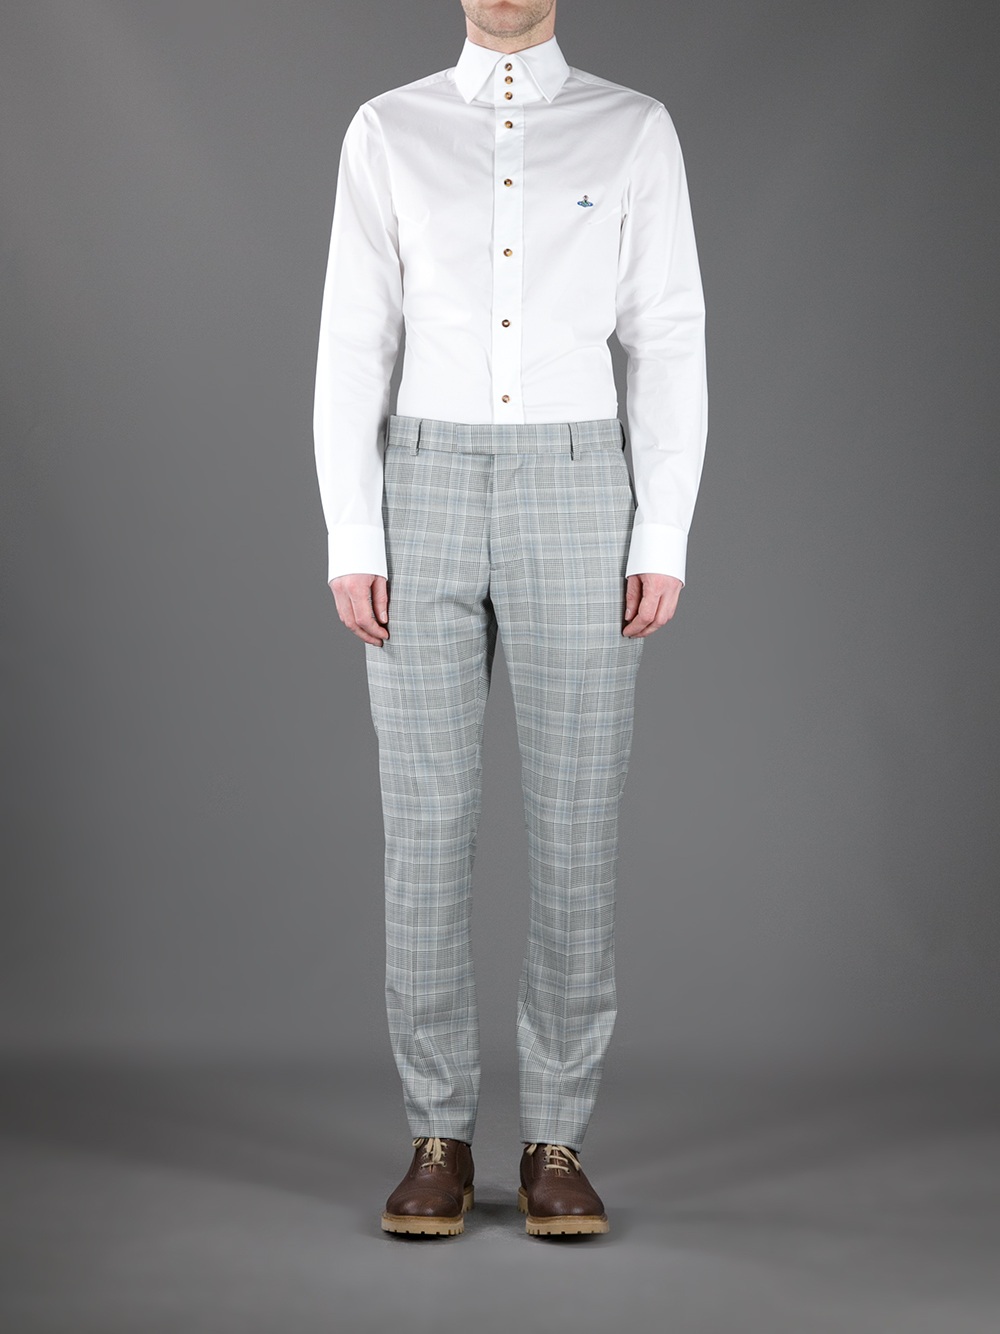 Vivienne Westwood Three Button Collar Shirt in White for Men - Lyst